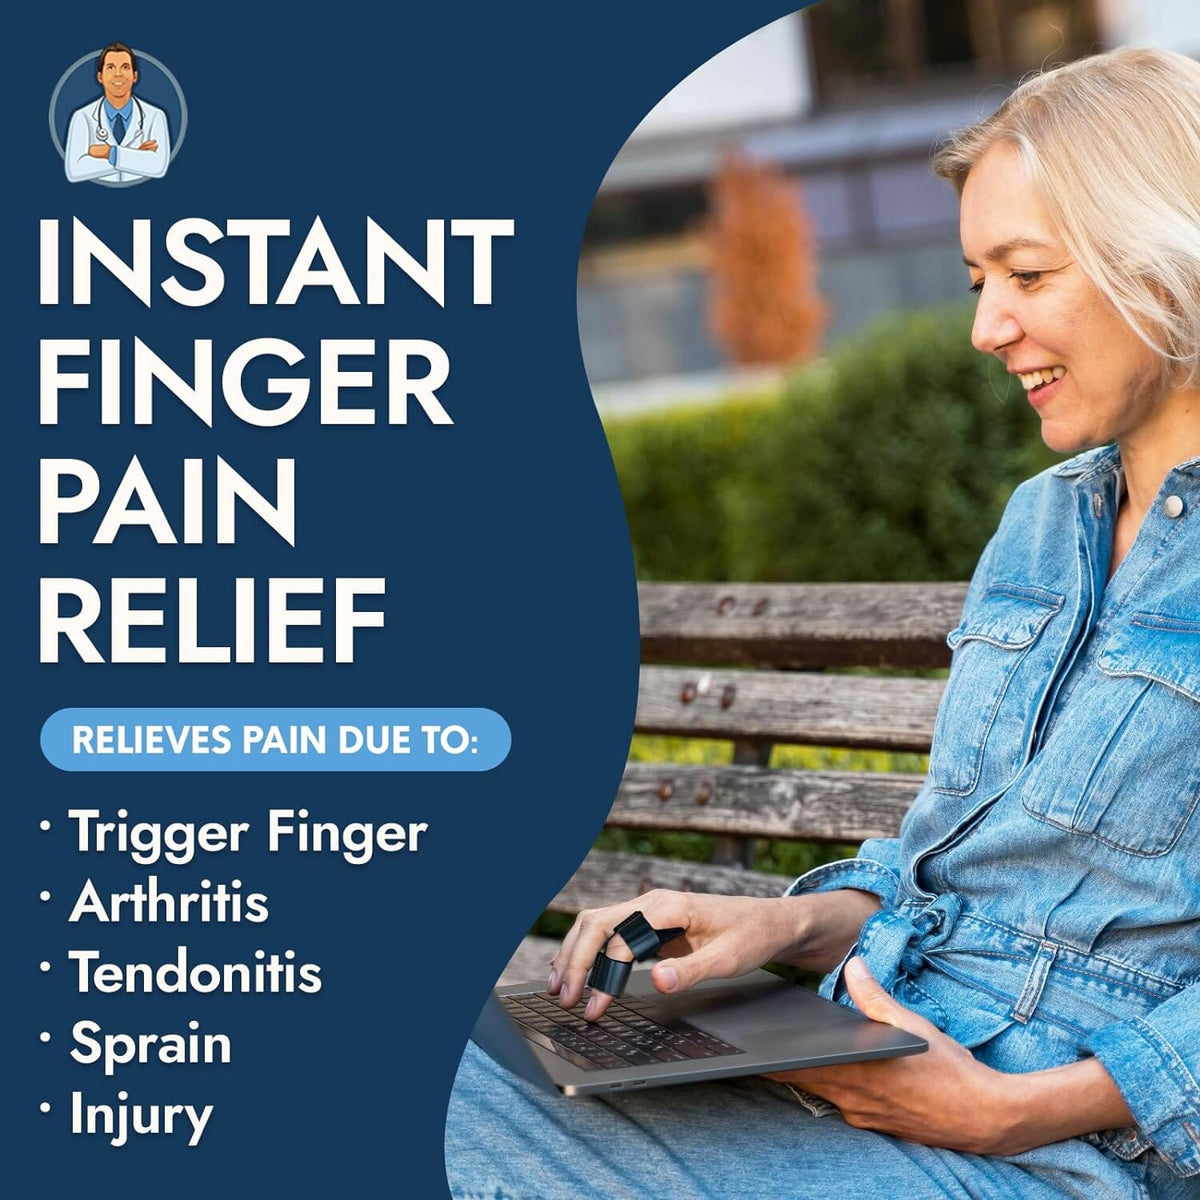 Dr. Frederick&#39;s Original Small Trigger Finger Splint - 2ct - Finger Brace for Arthritis, Injury, Sprain - Relieve Trigger Finger Pain - Small Size fits Pinky Fingers Trigger Finger Dr. Frederick&#39;s Original 